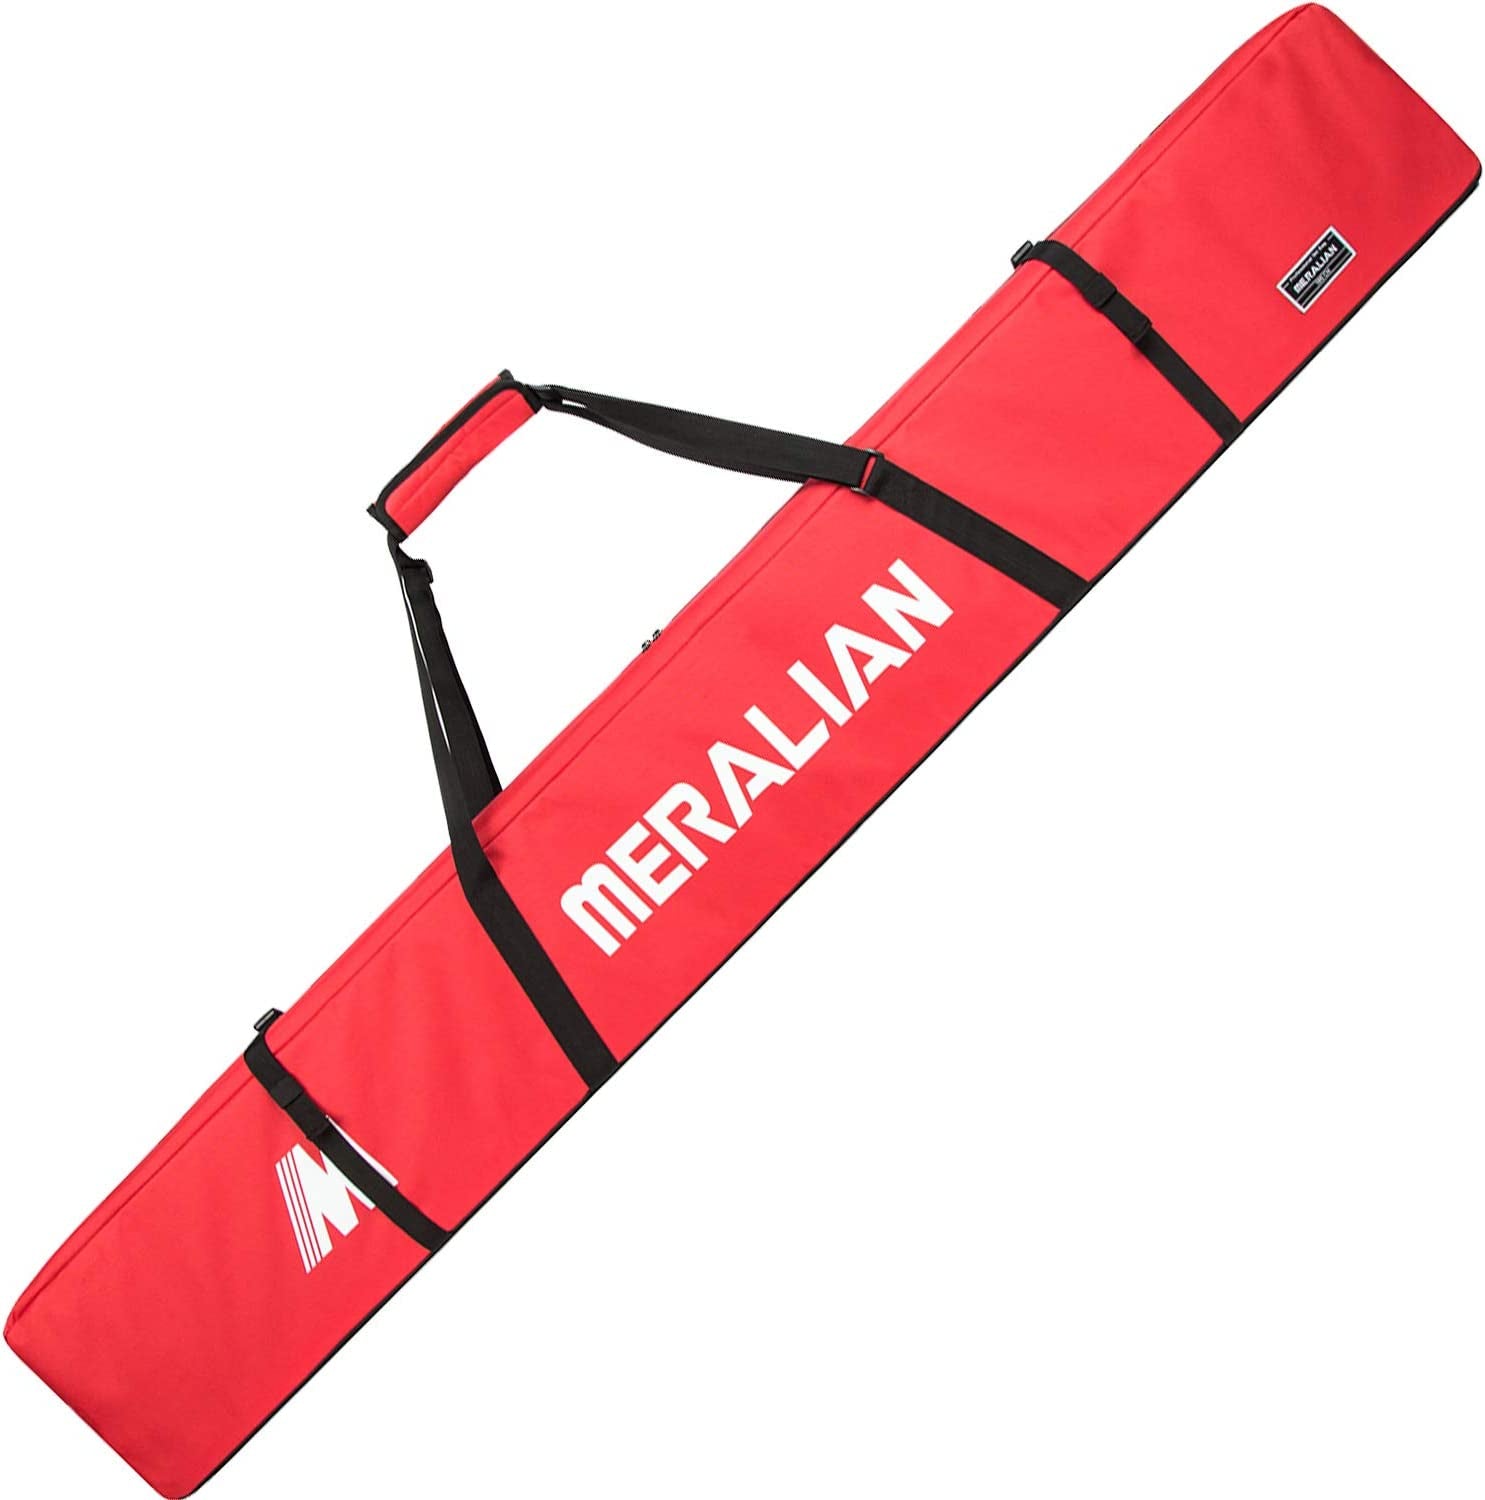 MERALIAN Padded Ski Bag,Waterproof Full Padded Single Ski Travel Bag with Adjustable Shoulder Strap.